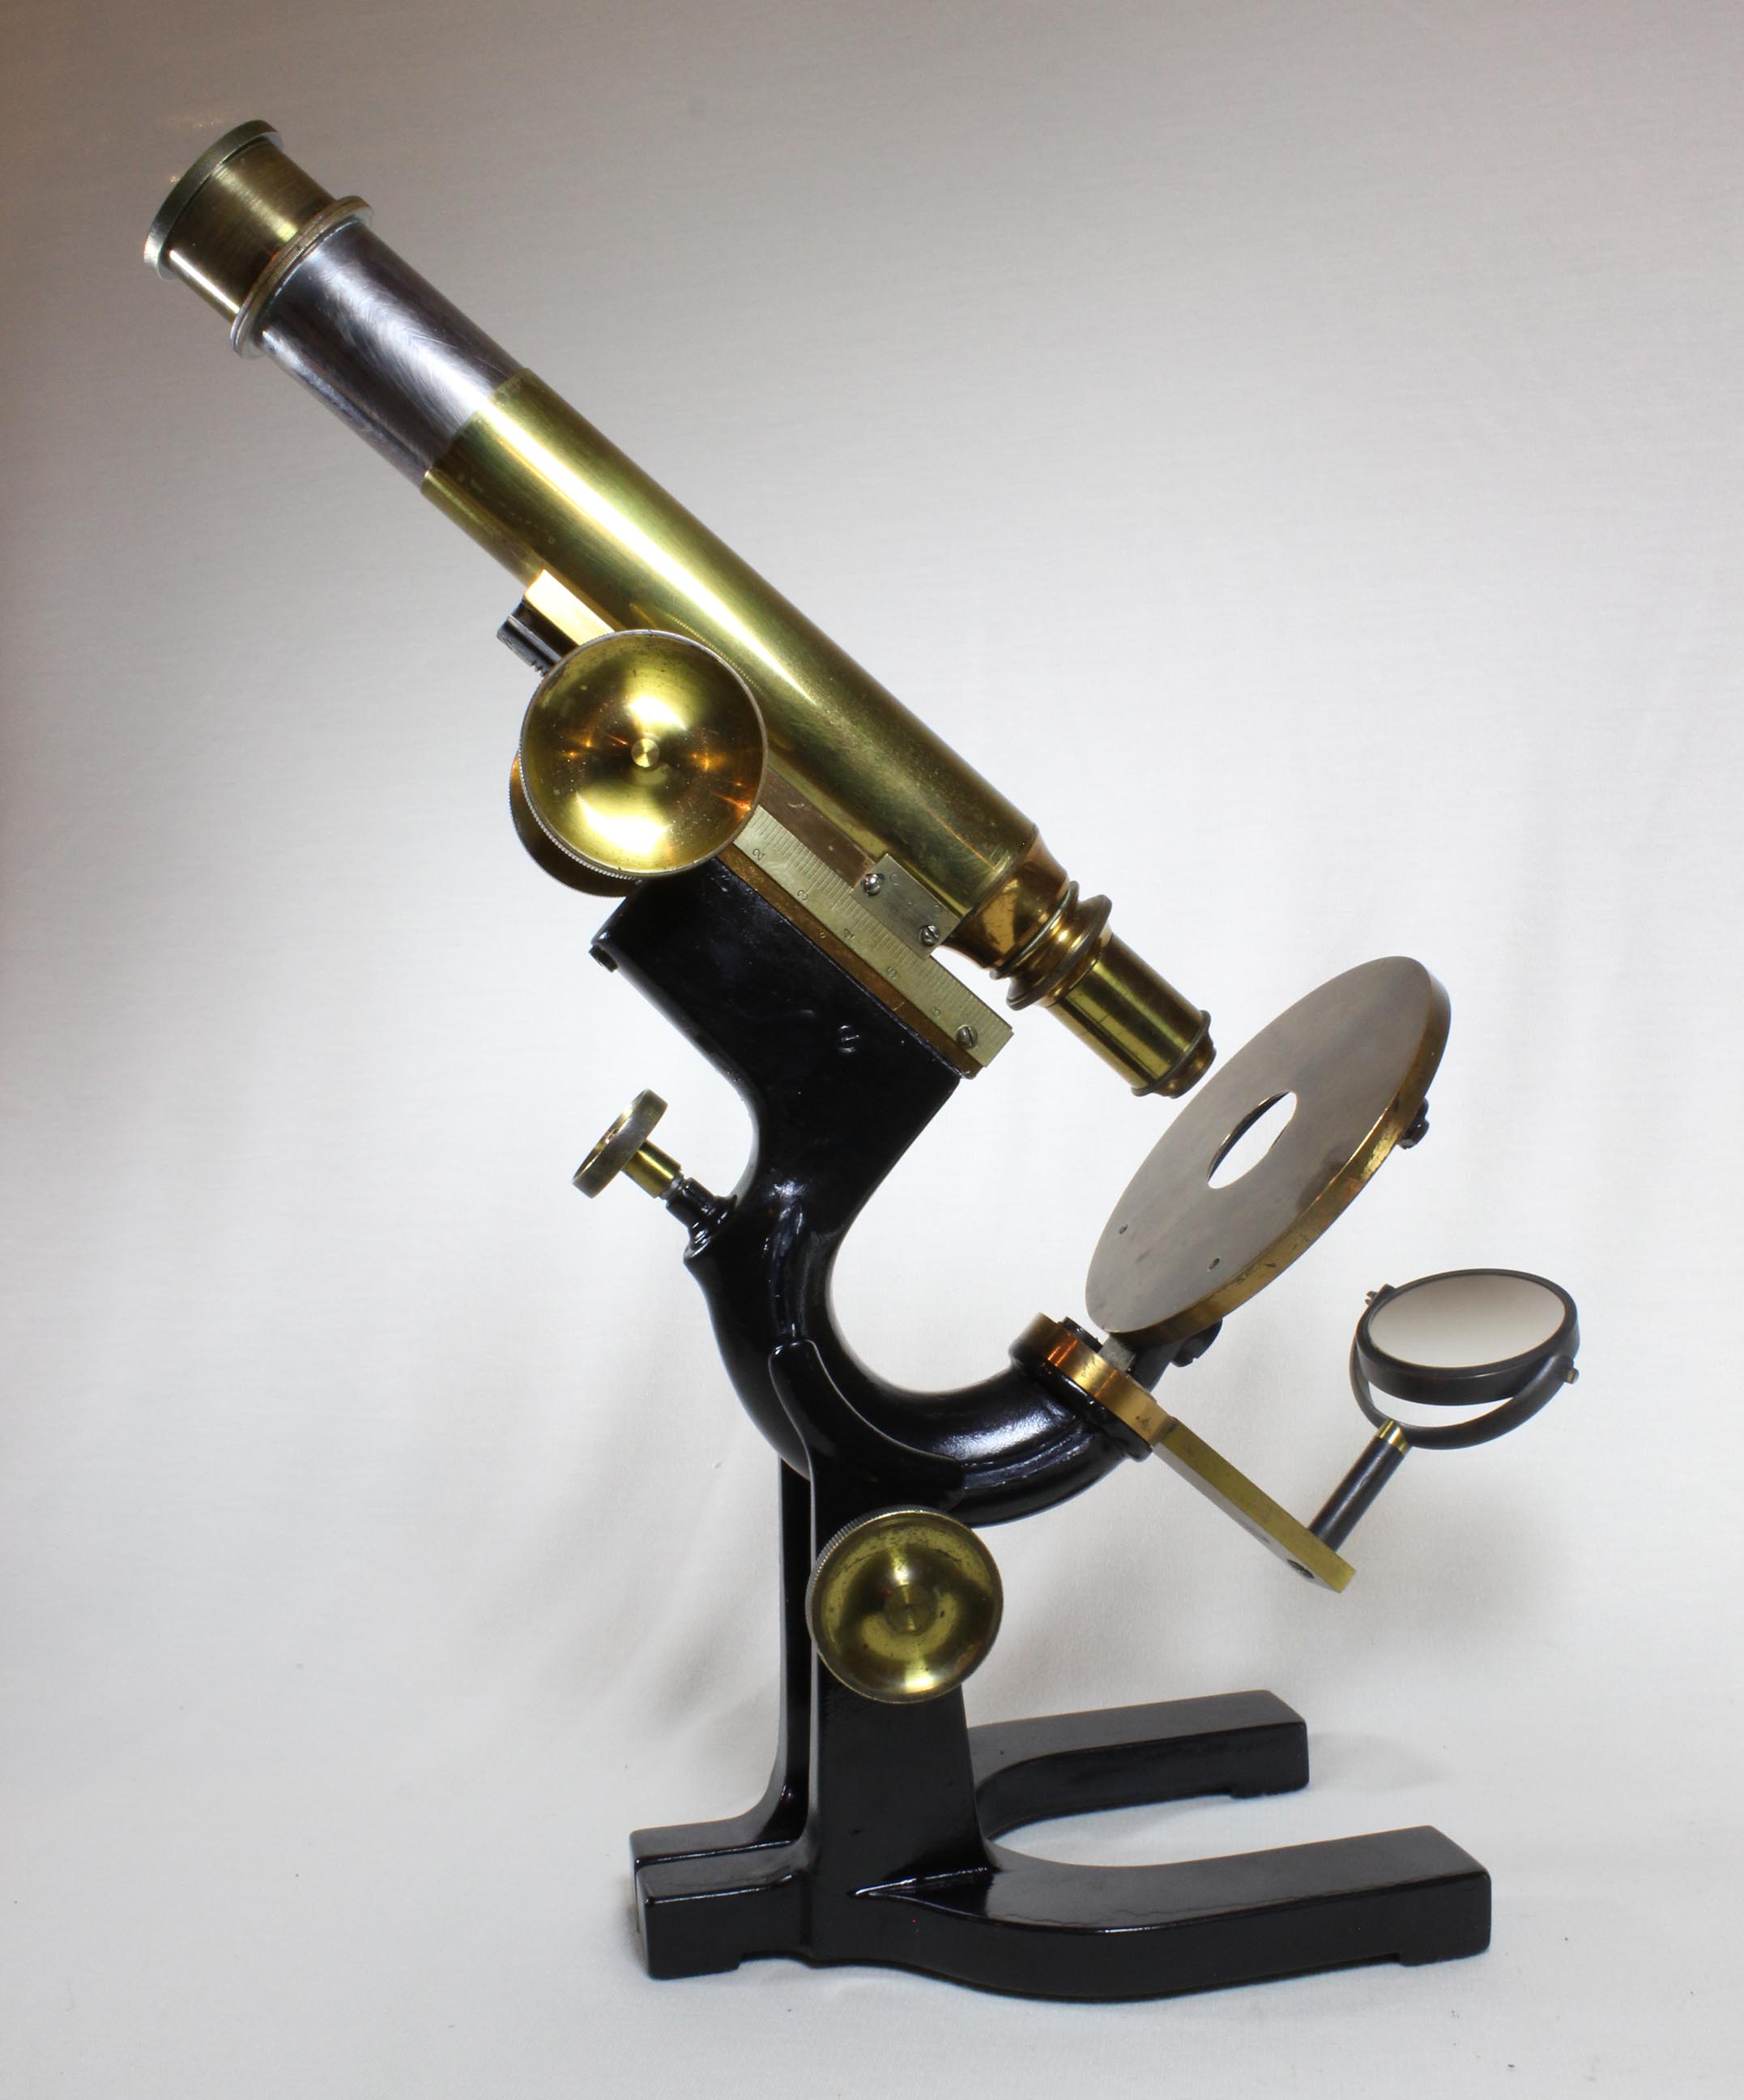 B and L Wale microscope